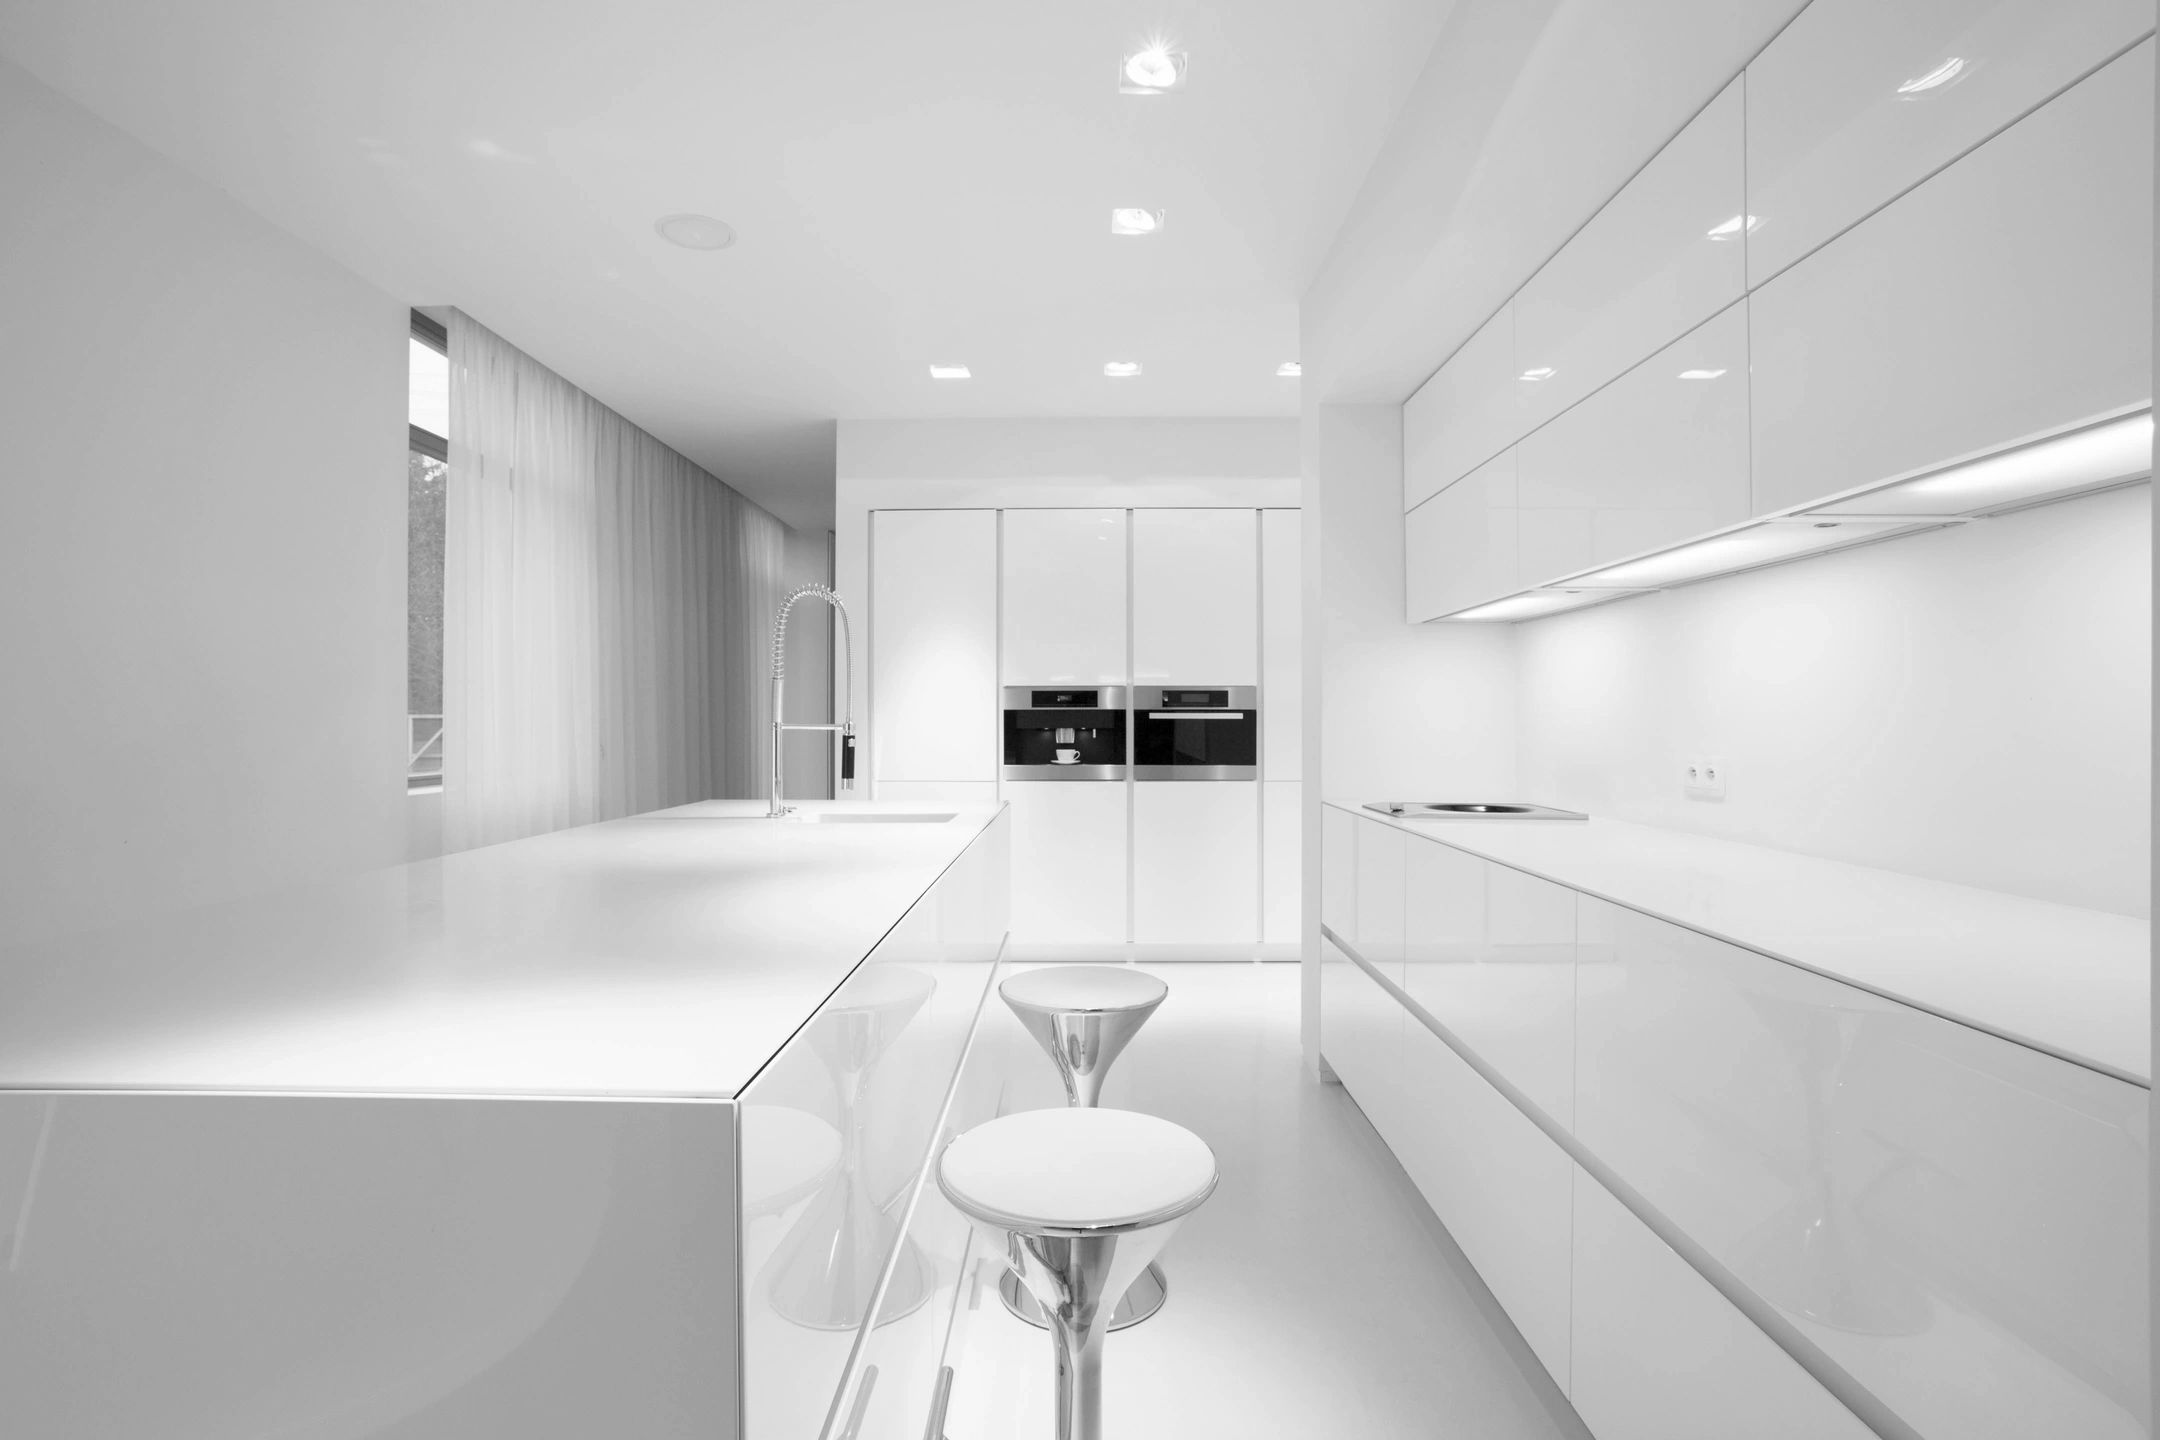 Gallery style kitchen 